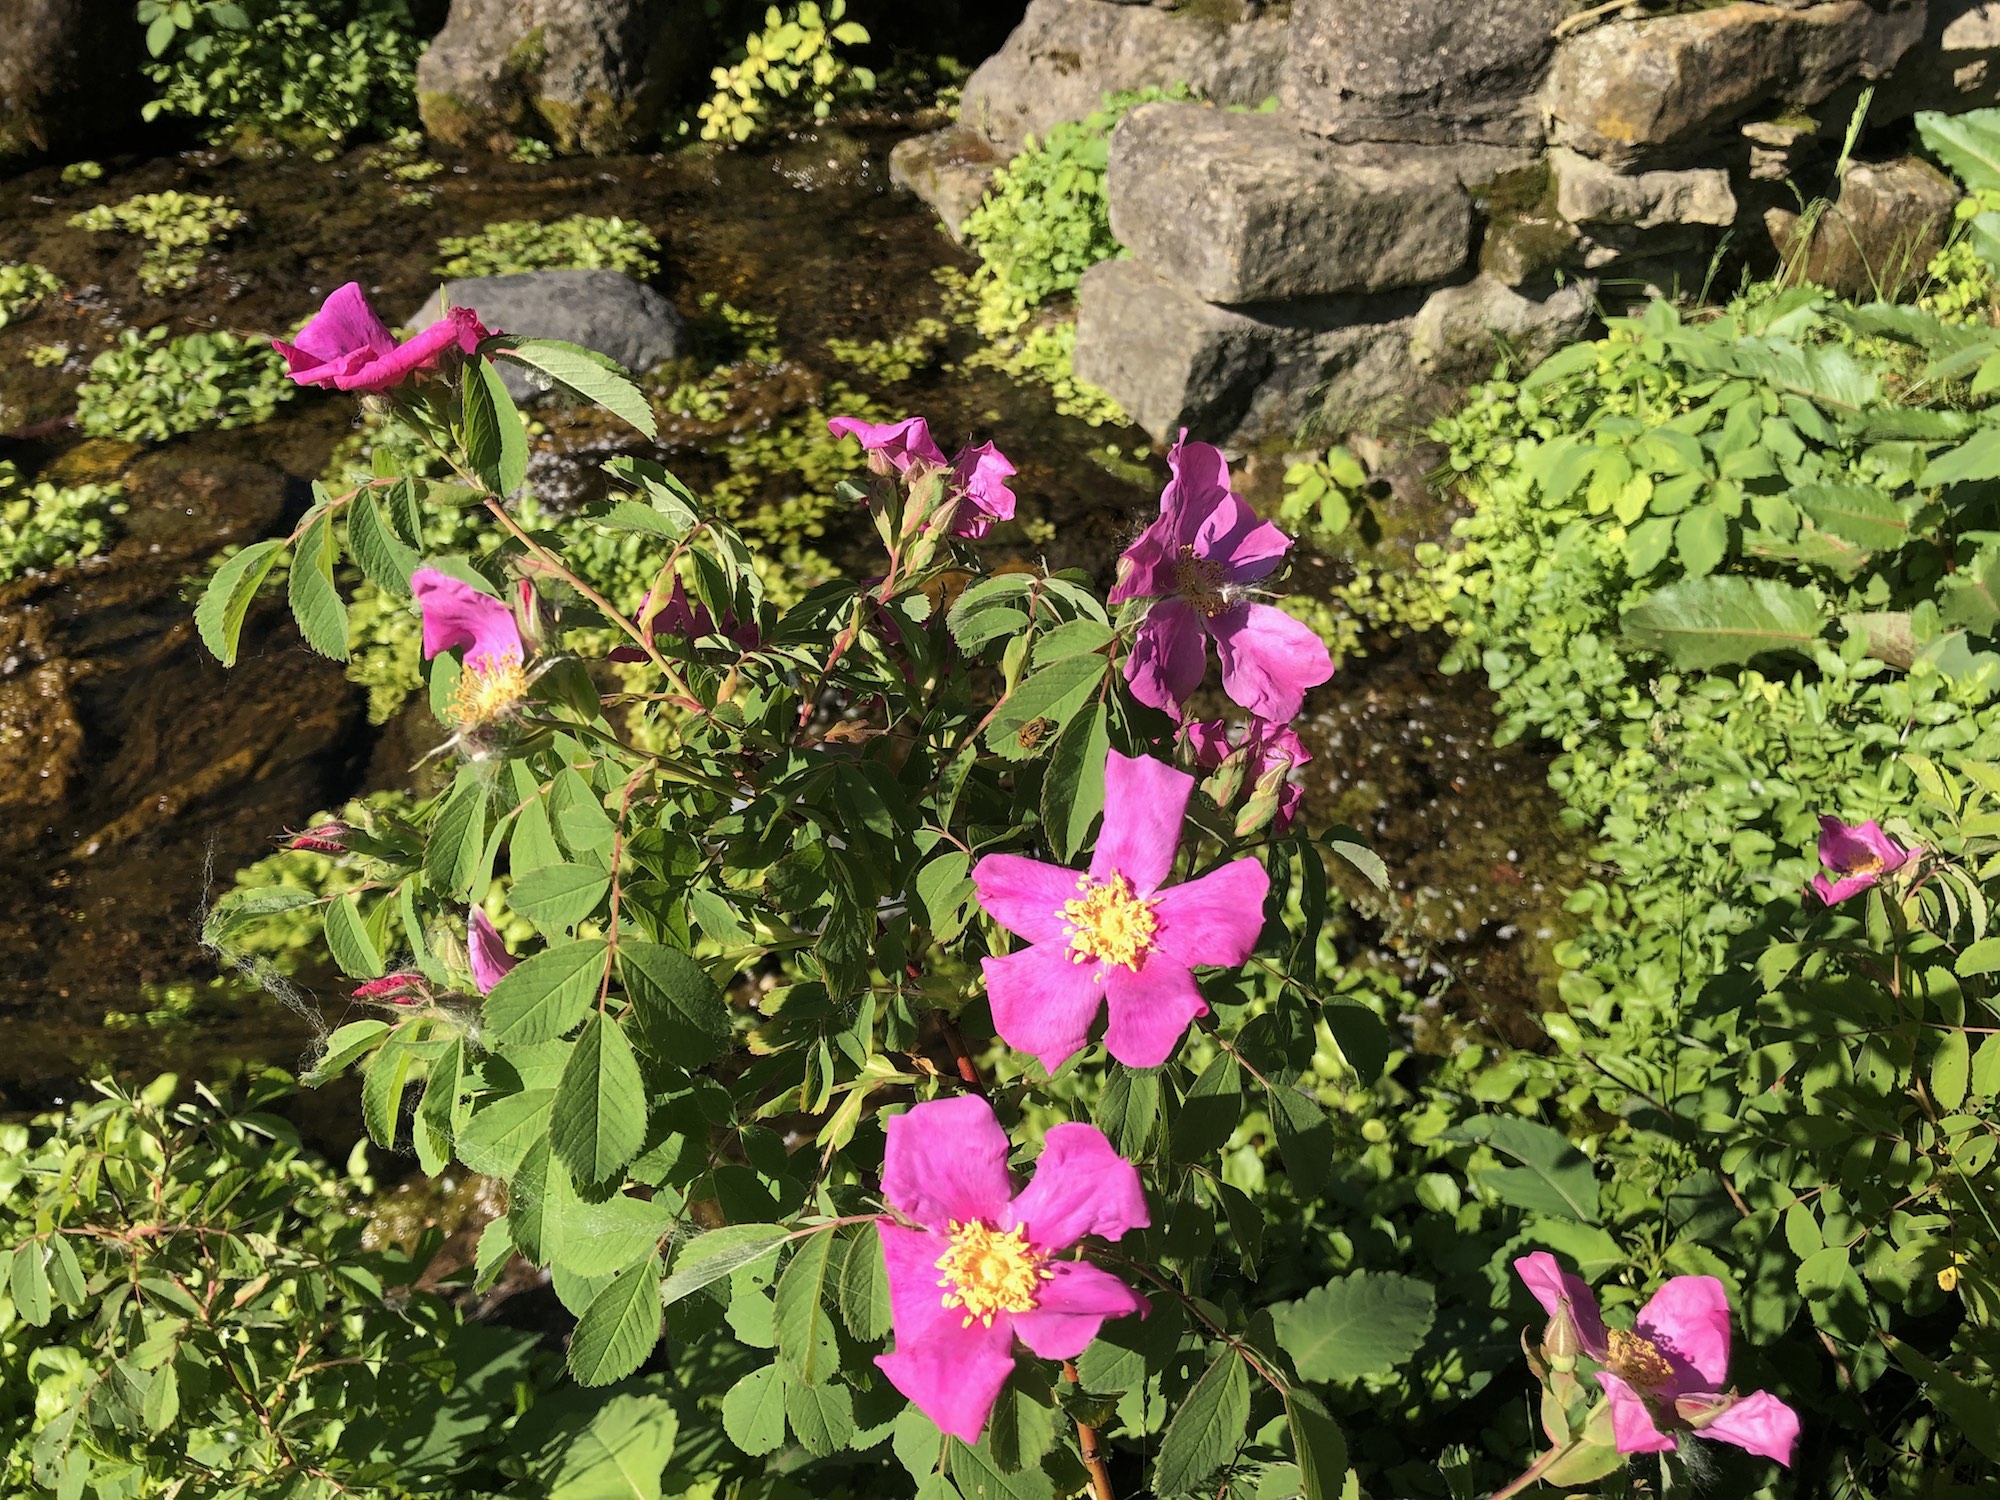 Prairie Rose (Rosa arkansana) at the Duck Pond in Madison, Wisconsin on June 8, 2019.